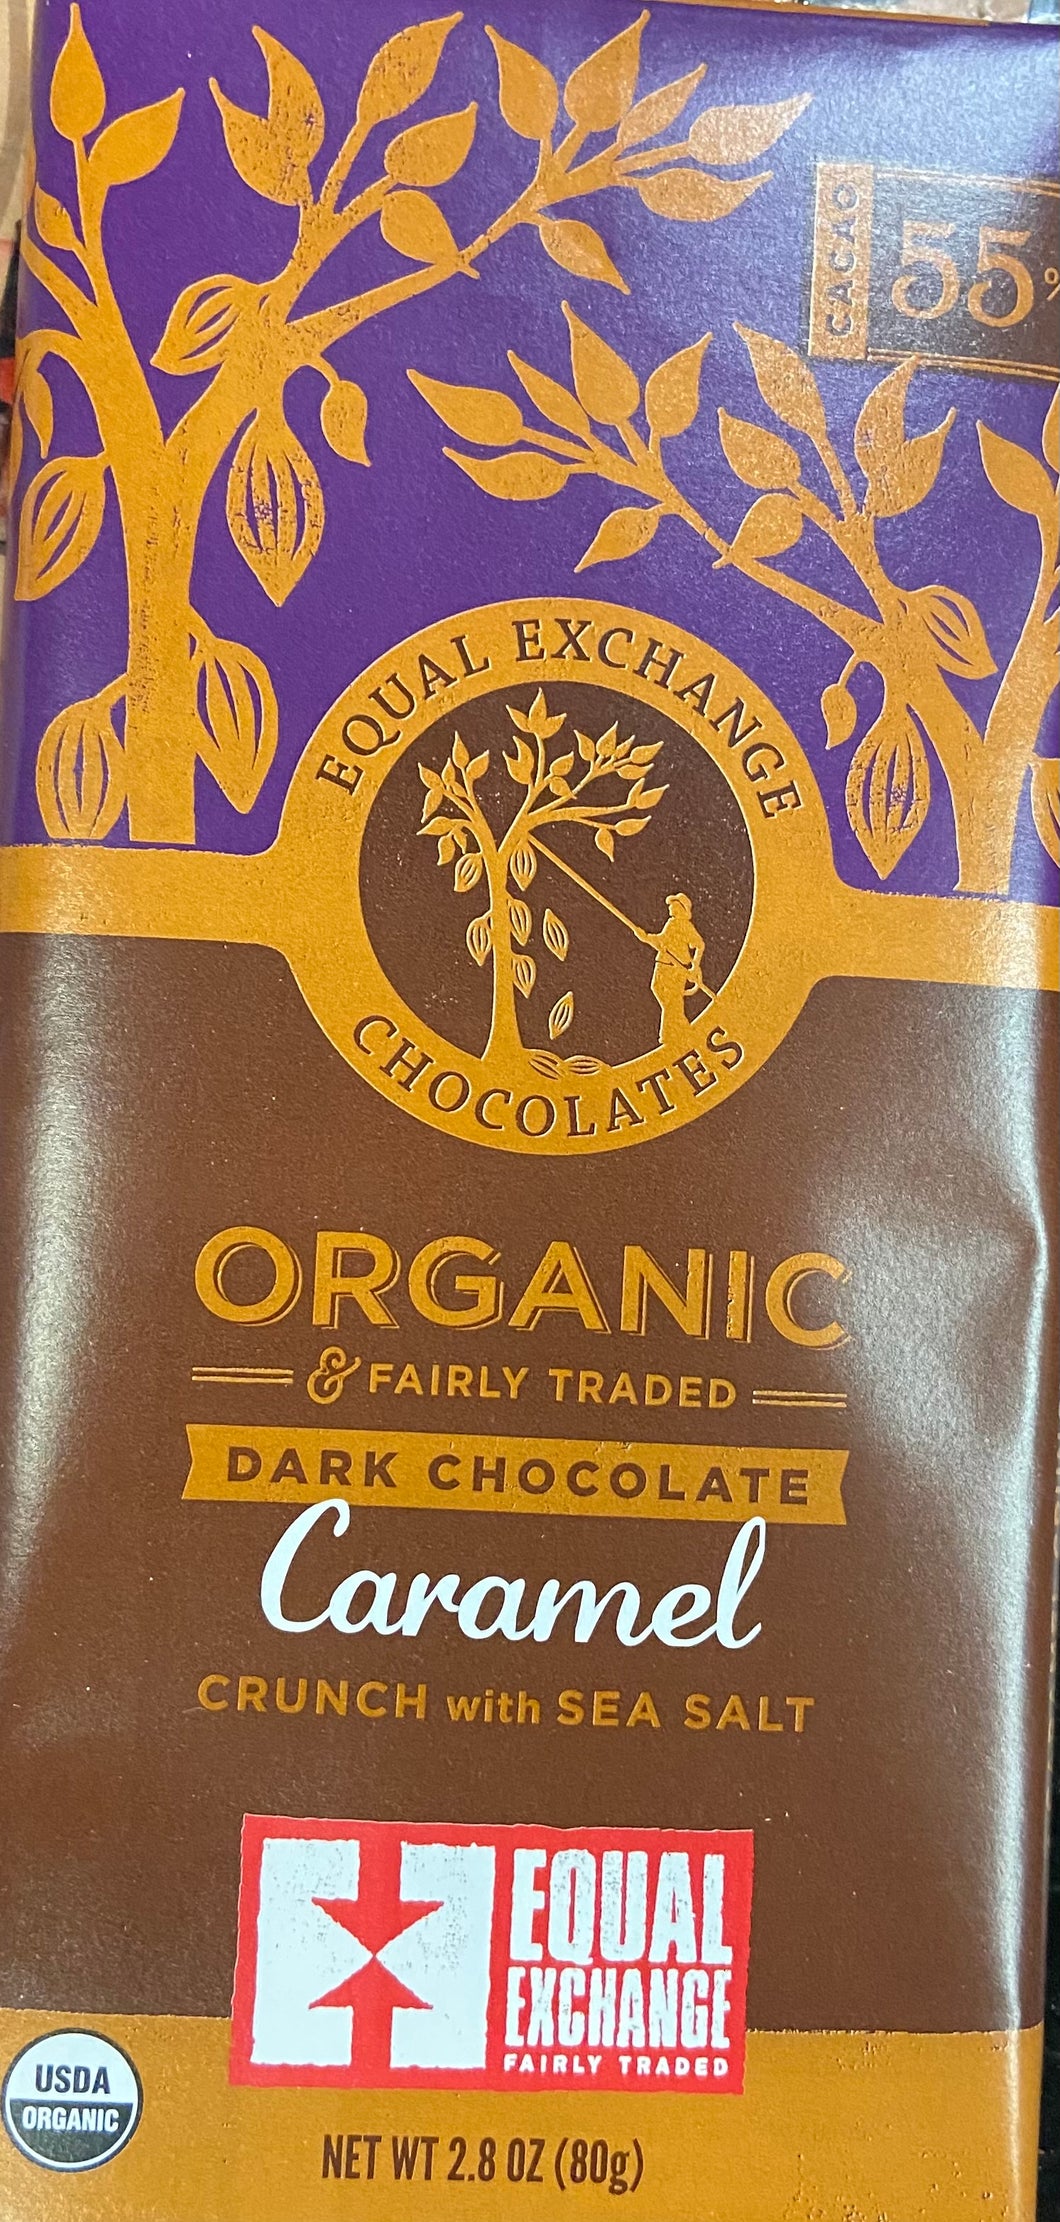 Chocolate Bar, Dark Caramel Crunch with Sea Salt, Organic 55% Cacao, Equal Exchange